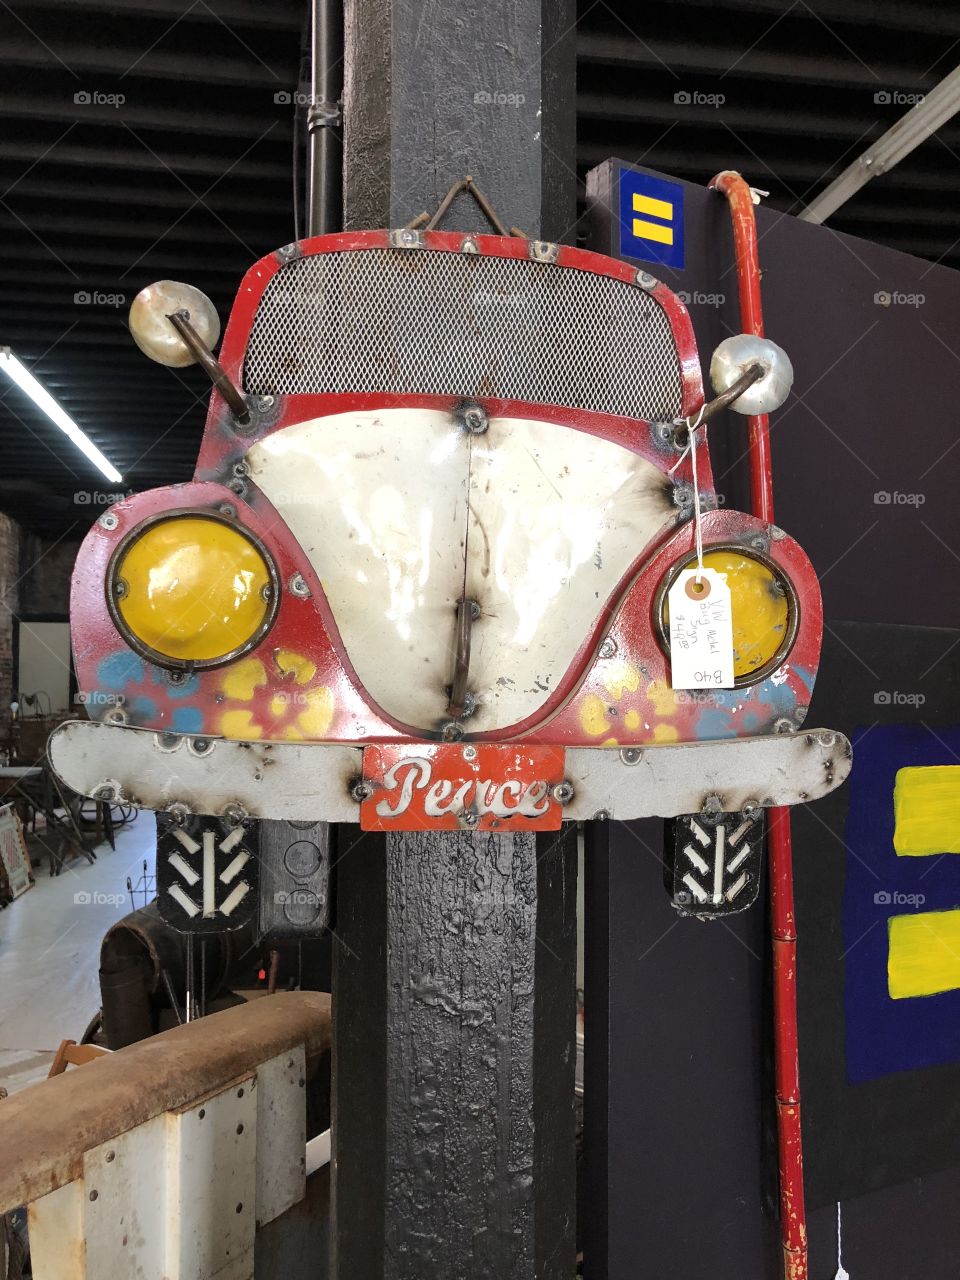 A Volkswagen metal  car in a shop that displays replica of car in a cutesy way. 